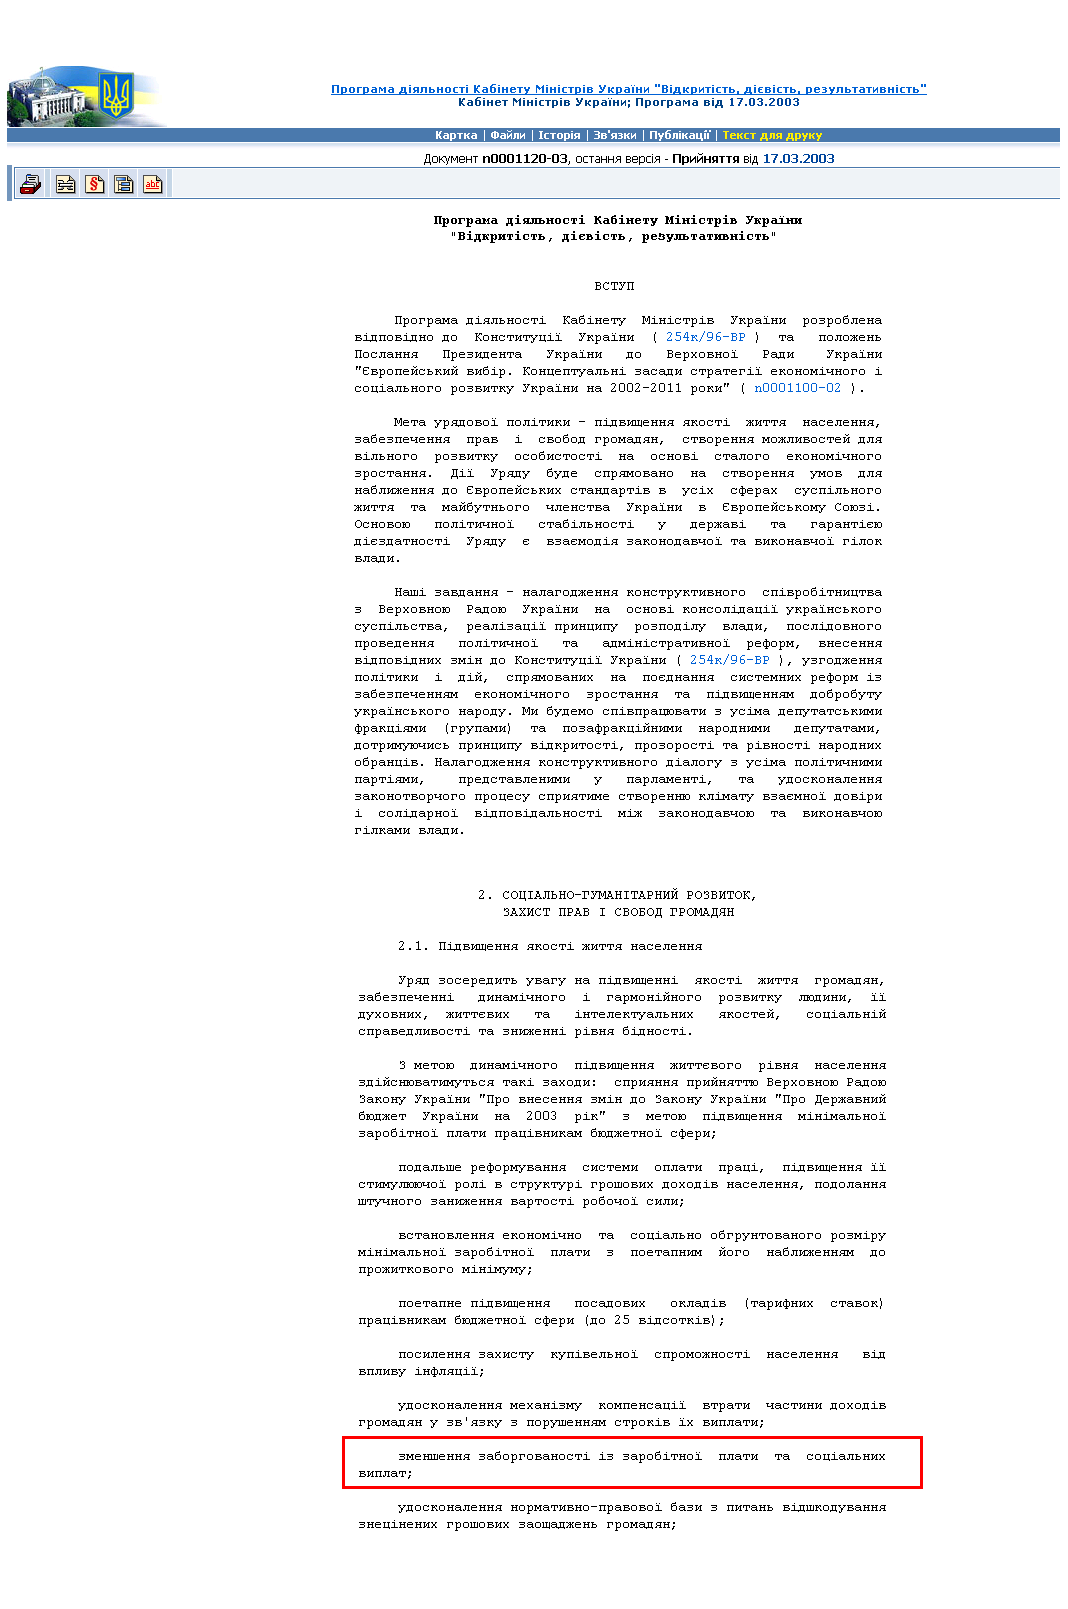 http://zakon2.rada.gov.ua/laws/show/n0001120-03